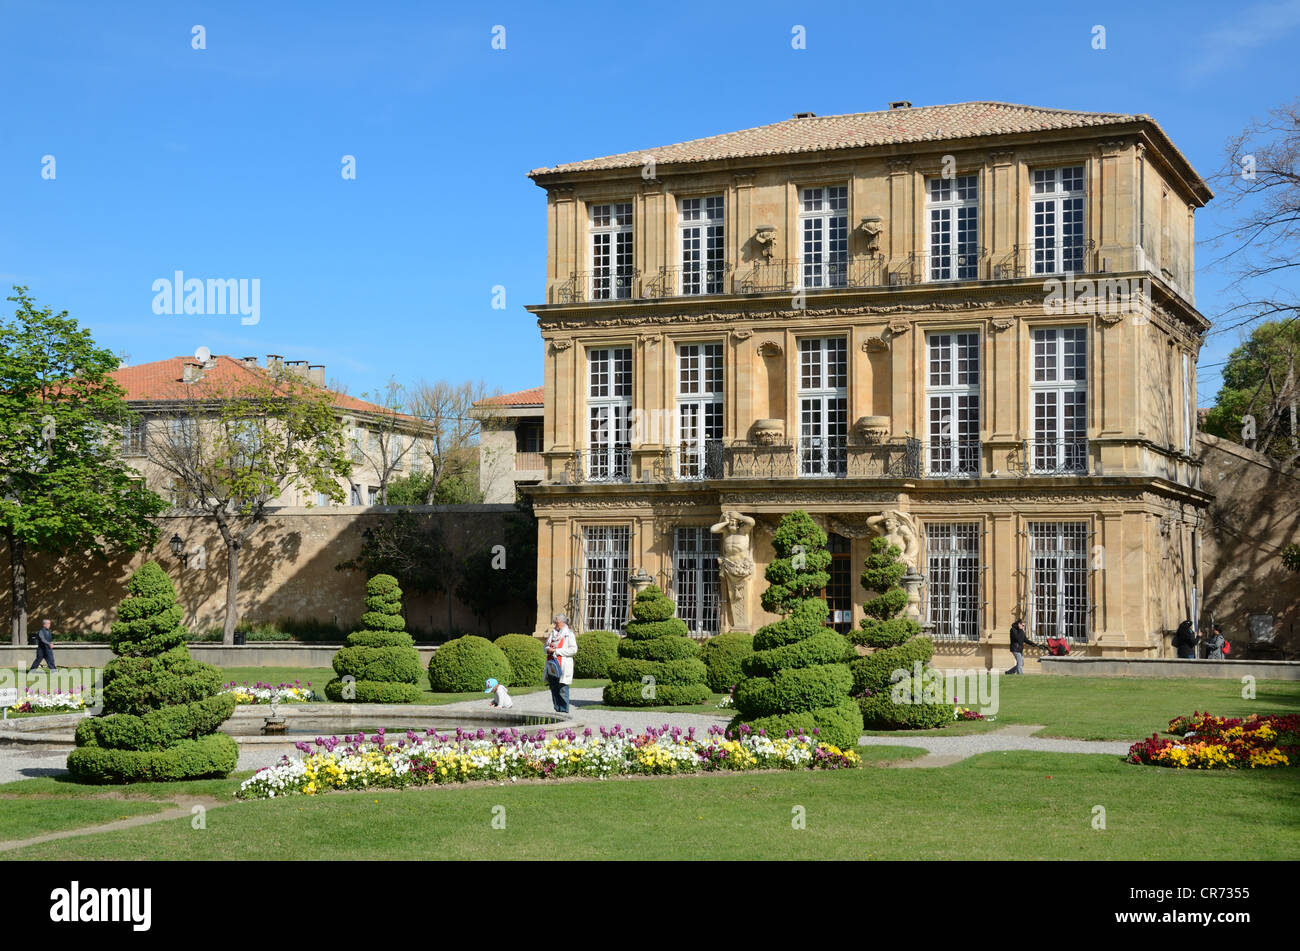 Pavillon Vendôme Garten und Brunnen mit Frühlingsblumen und Formschnitt Bäume Aix-en-Provence Frankreich Stockfoto